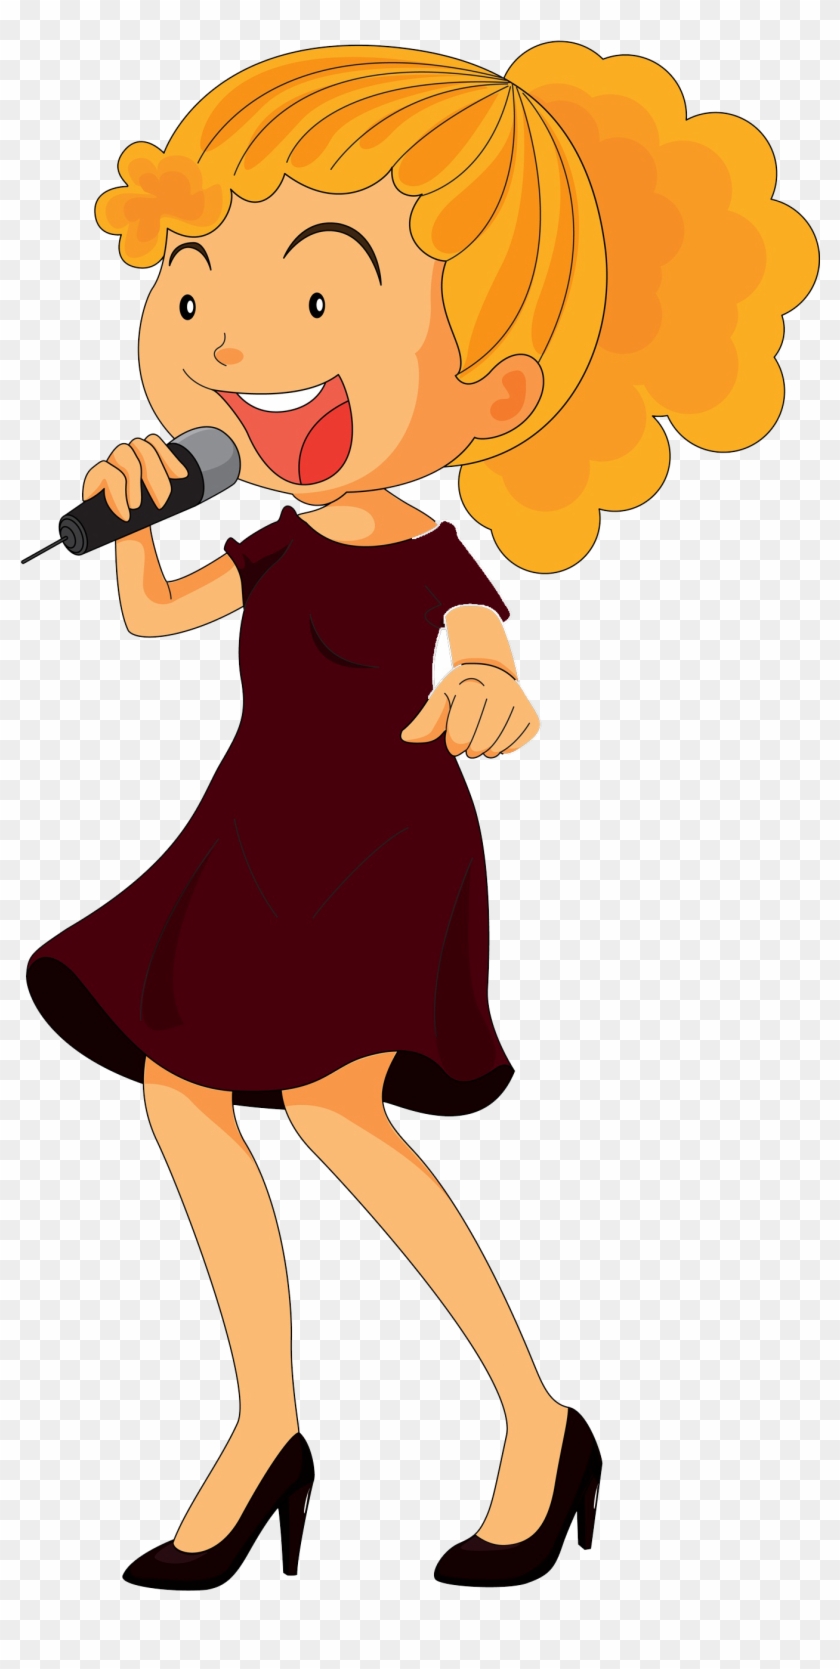 Microphone Girl Cartoon Illustration - Microphone Girl Cartoon Illustration #368543